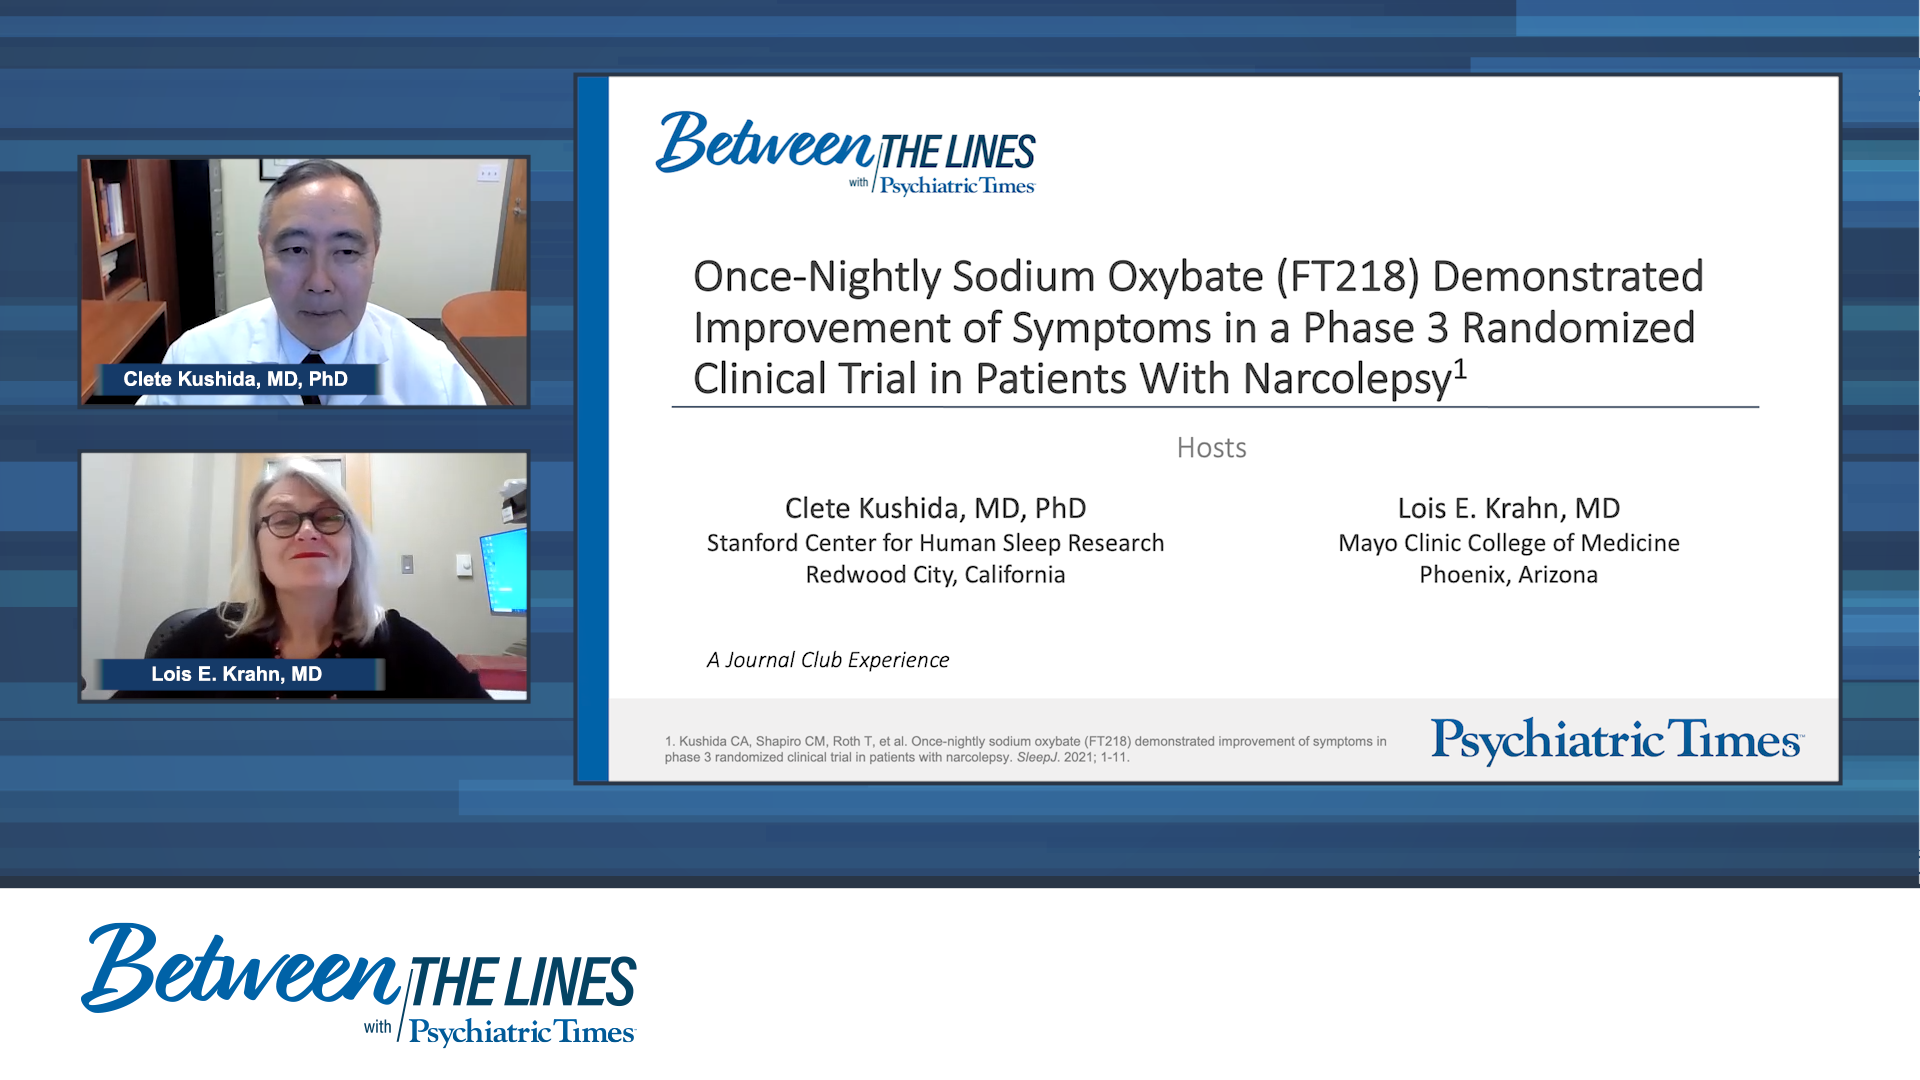 Presentation: Improvement of Narcolepsy Symptoms with Once-Nightly Sodium Oxybate